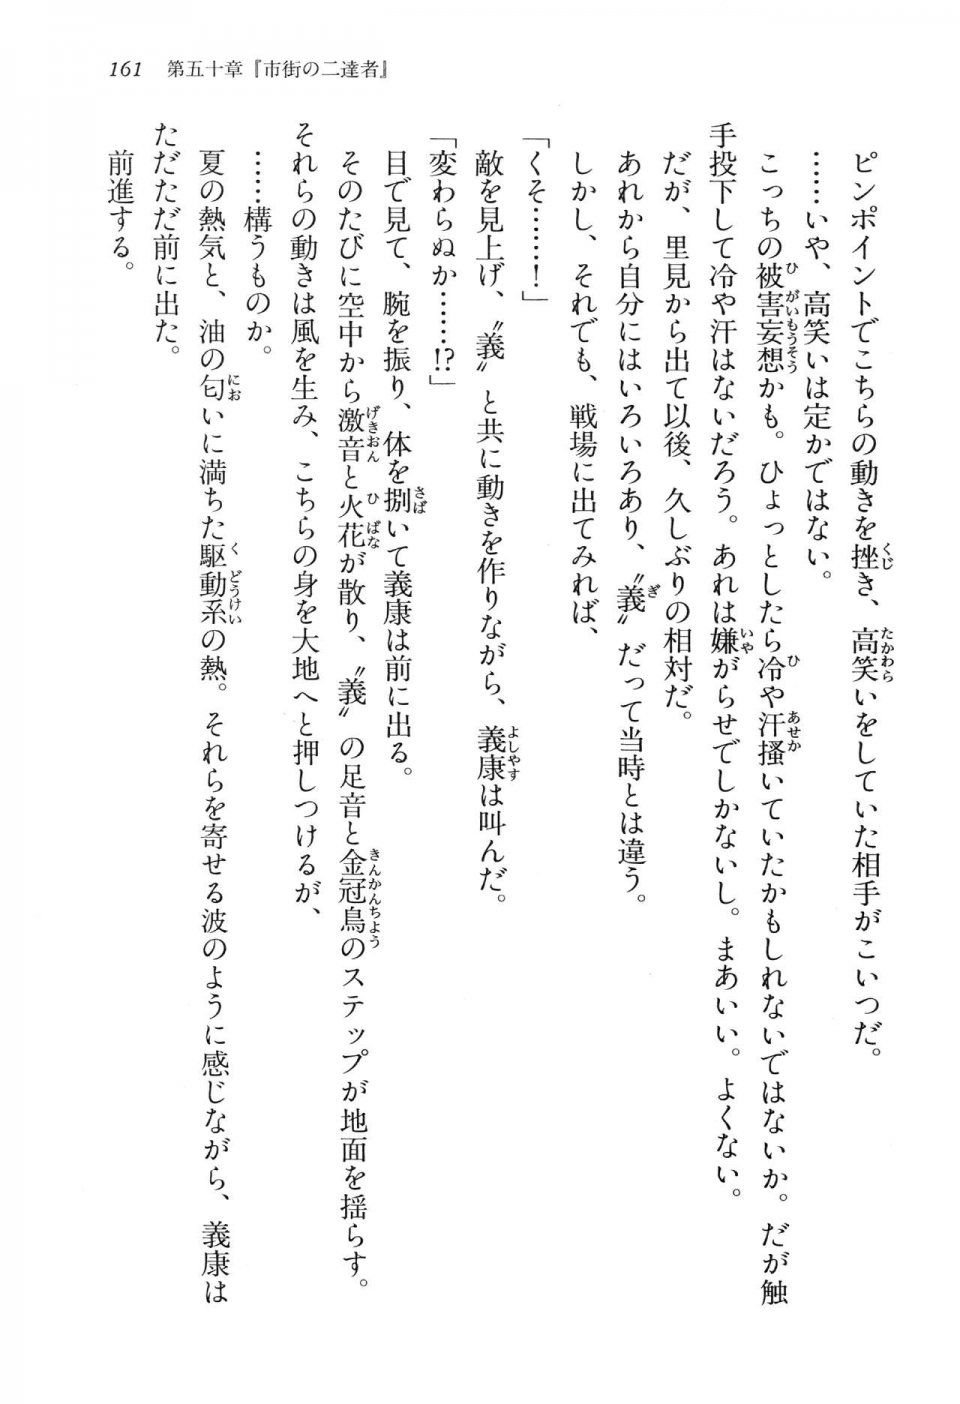 Kyoukai Senjou no Horizon LN Vol 15(6C) Part 1 - Photo #161